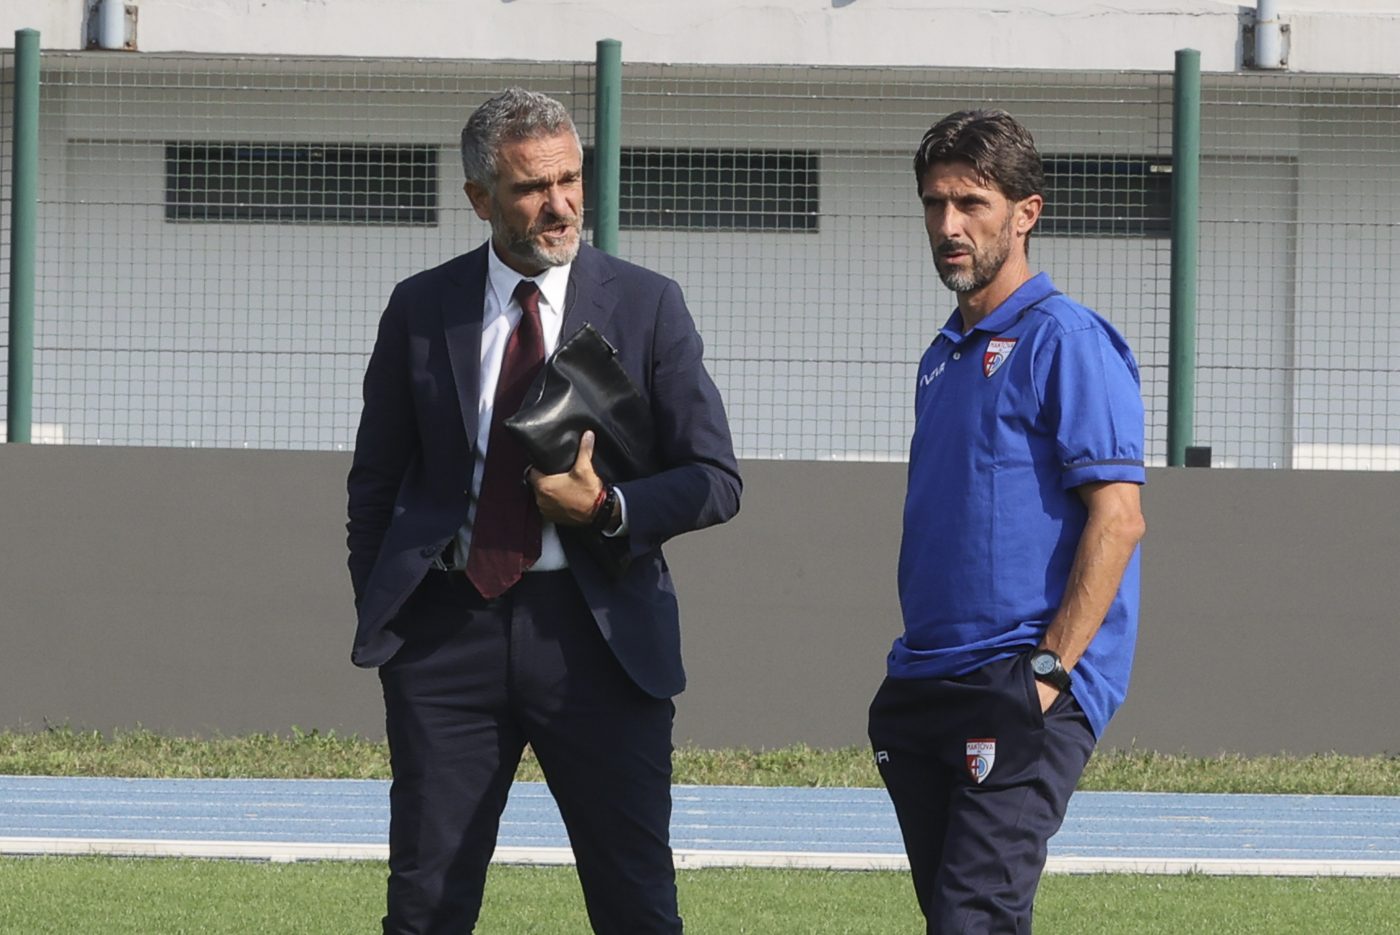 Calcio Seri Si – Mantua, Batiste speaking: “No drama. The future is on our side”